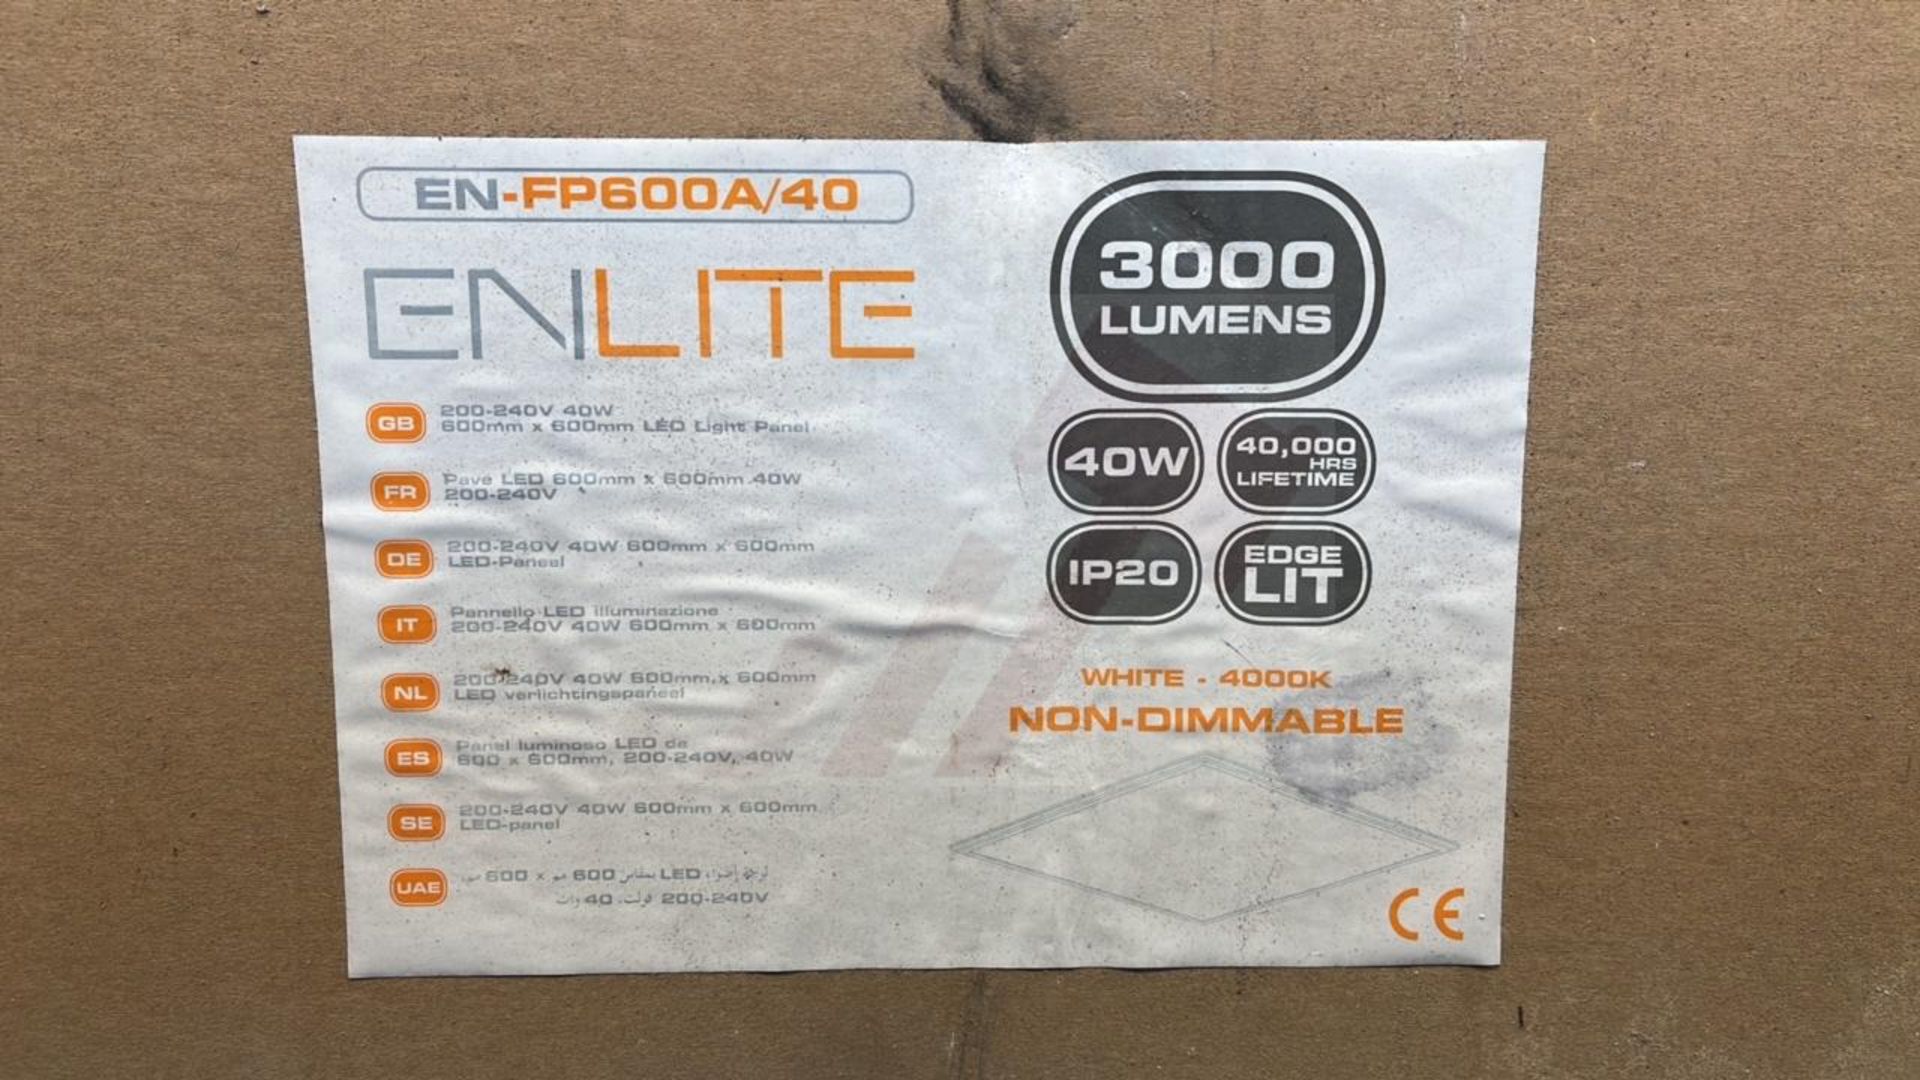 2 x Enlite EN-FP600A/40 Led Light Panels - Image 2 of 2